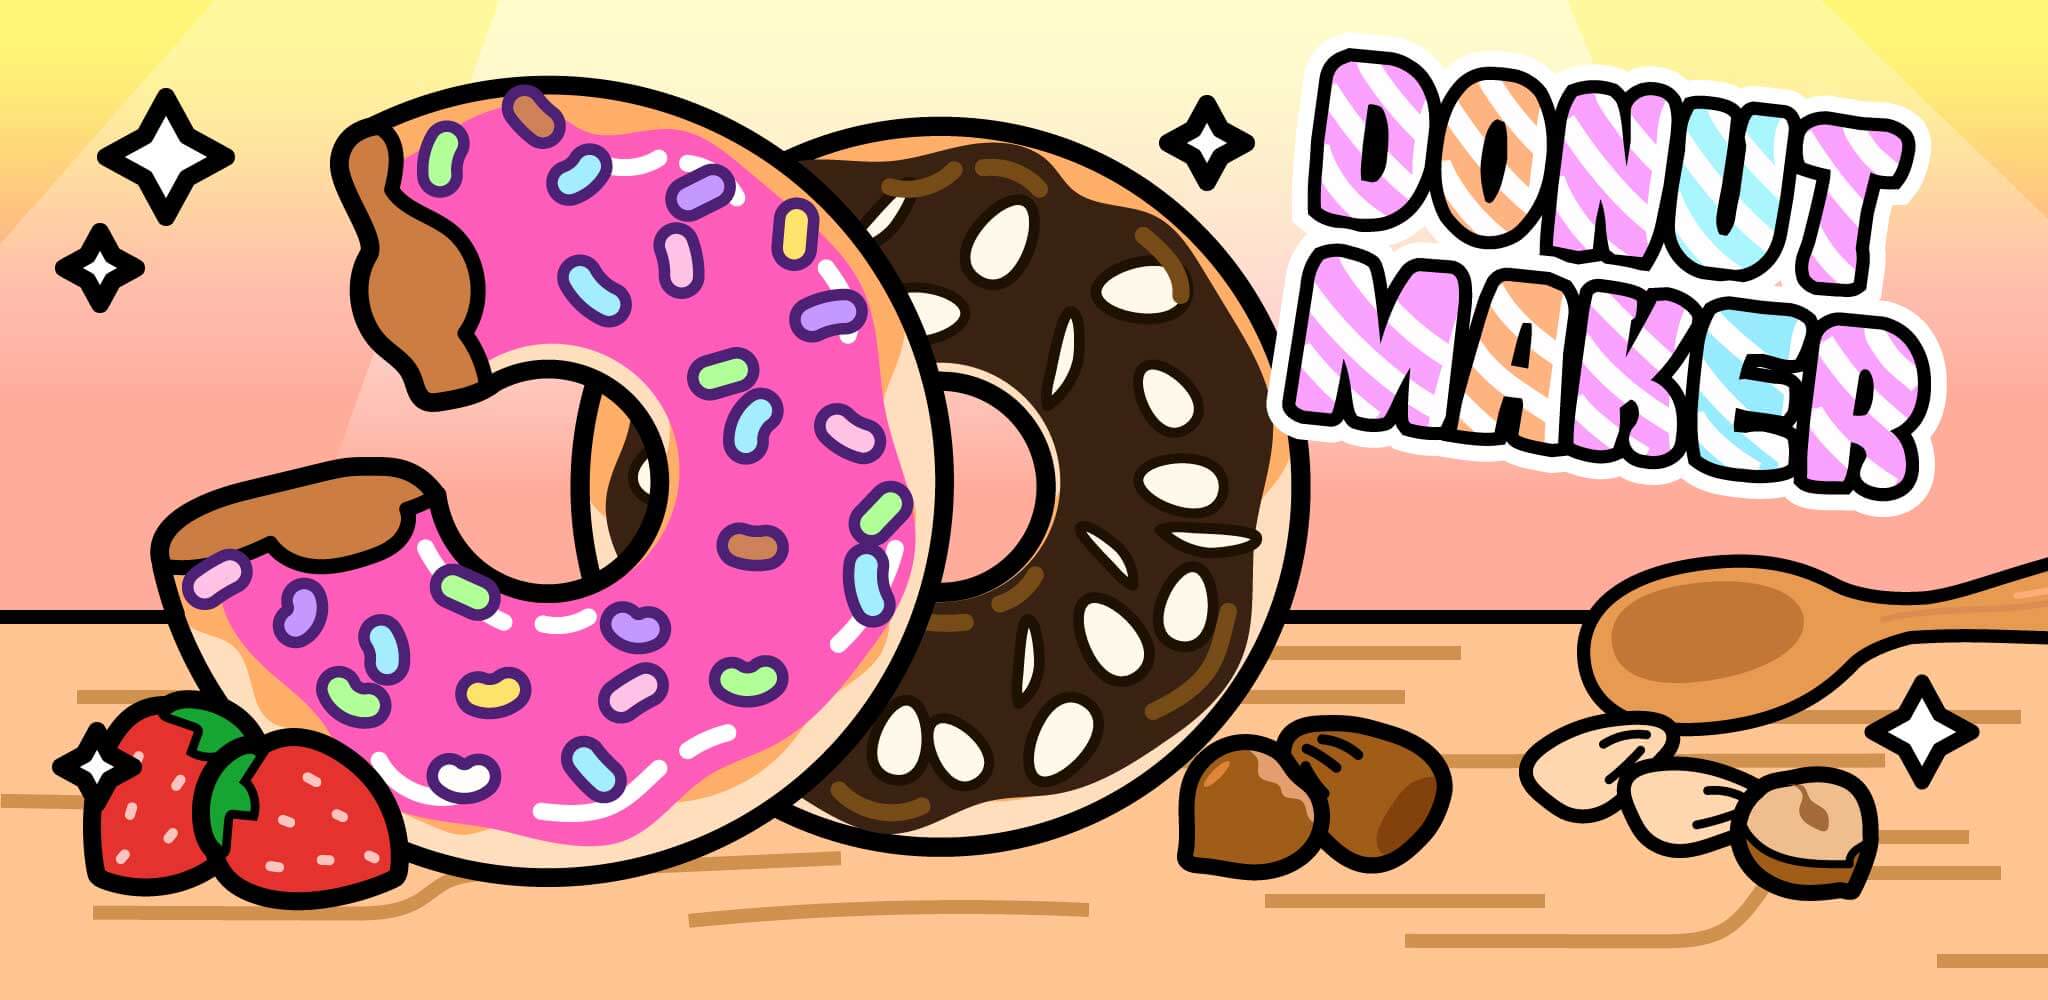 Image Make Donut Fun Again!